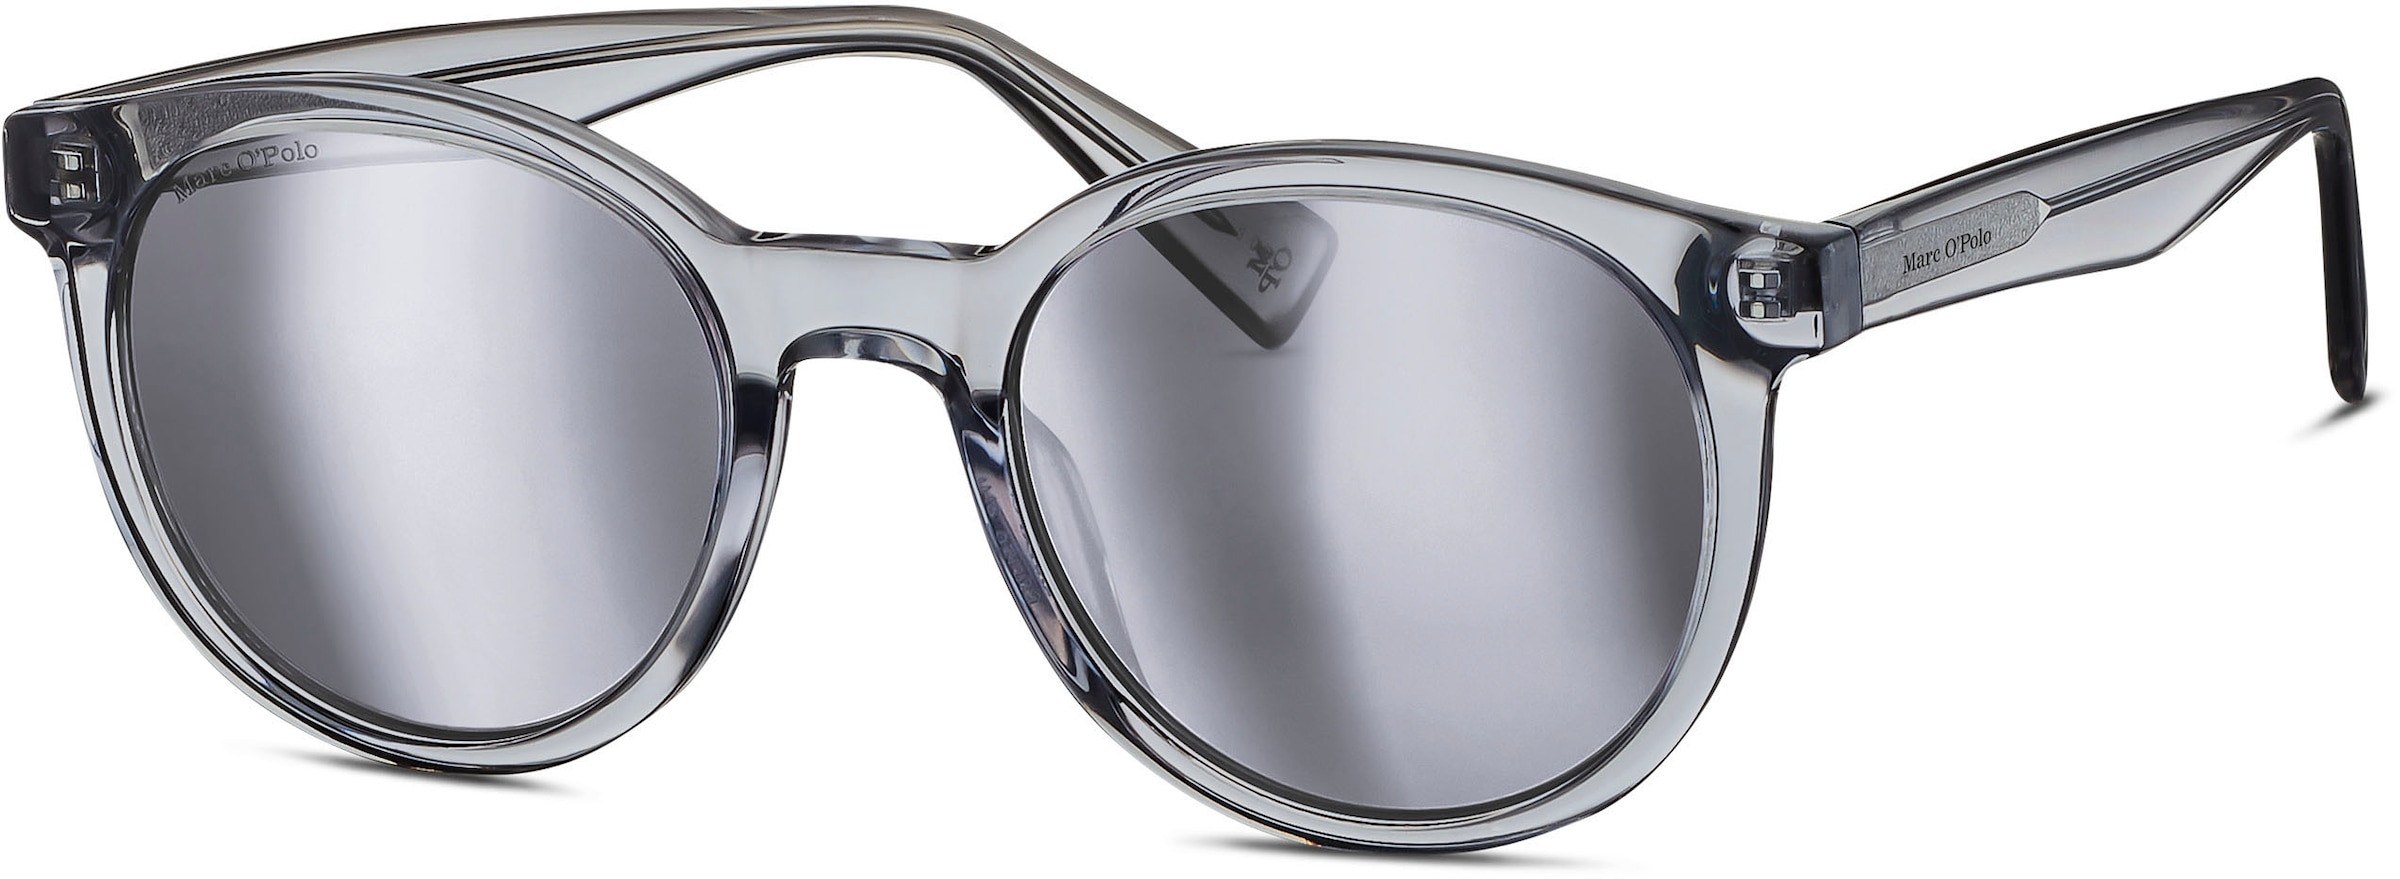 Marc O'Polo Sonnenbrille »Modell 506185«, Panto-Form